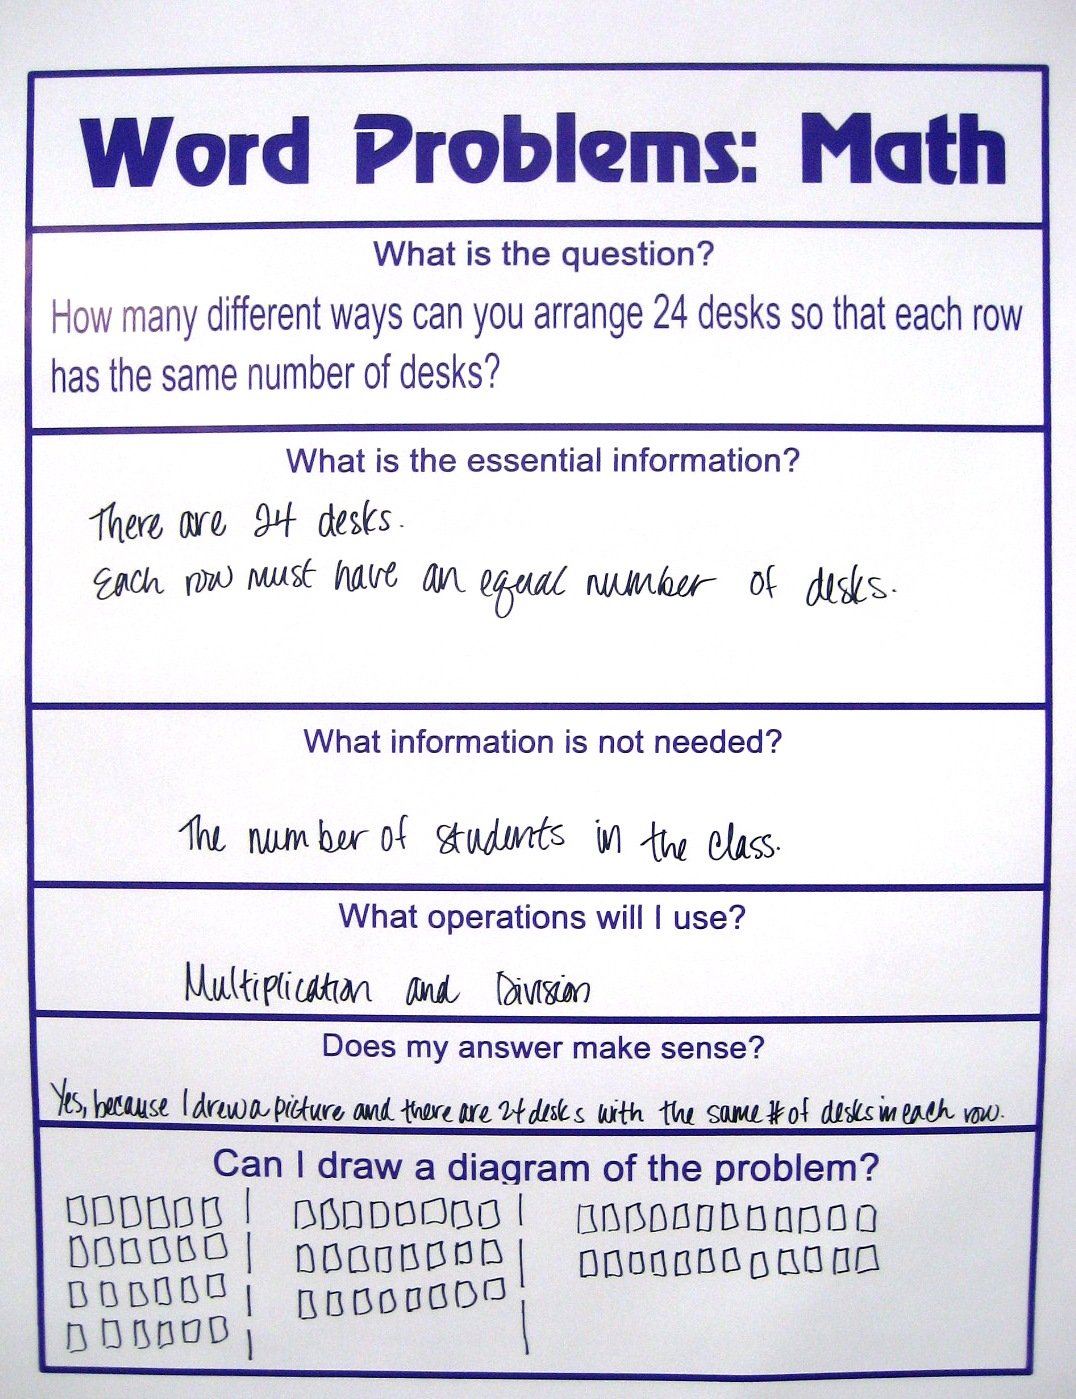 Grades K-5 Activity: Solving Word Problems